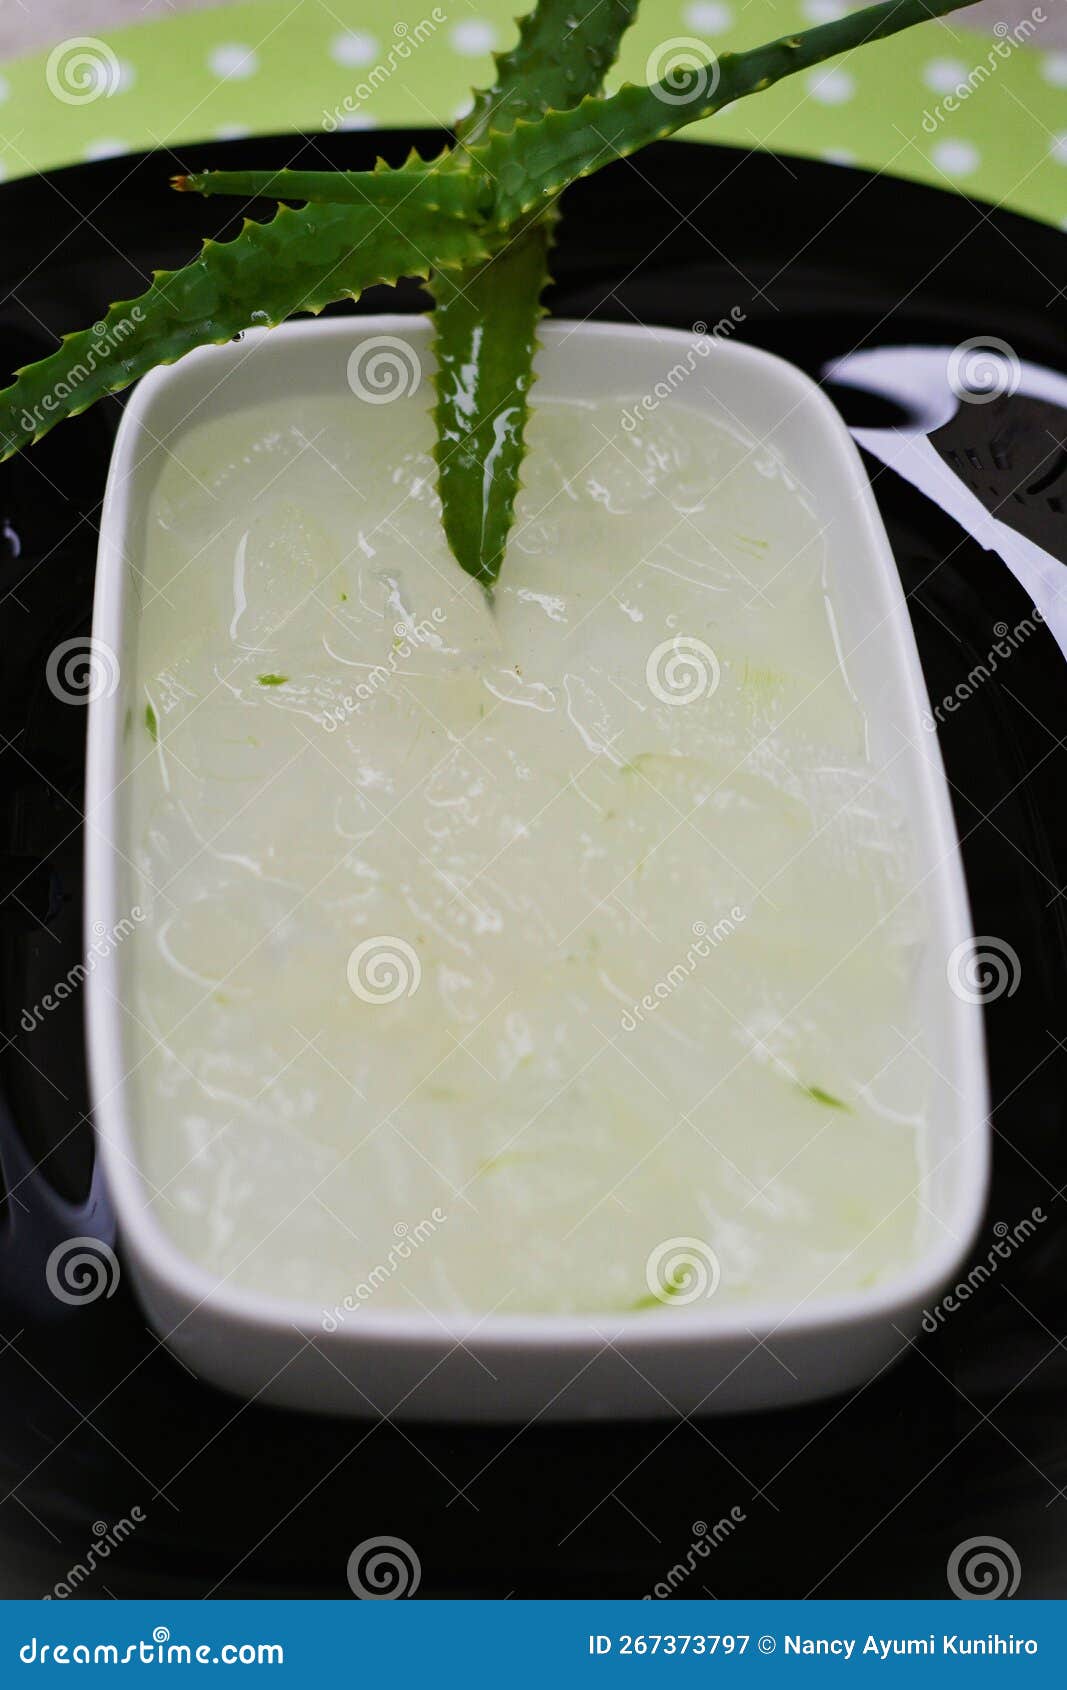 the freshness of aloe vera leaf juice